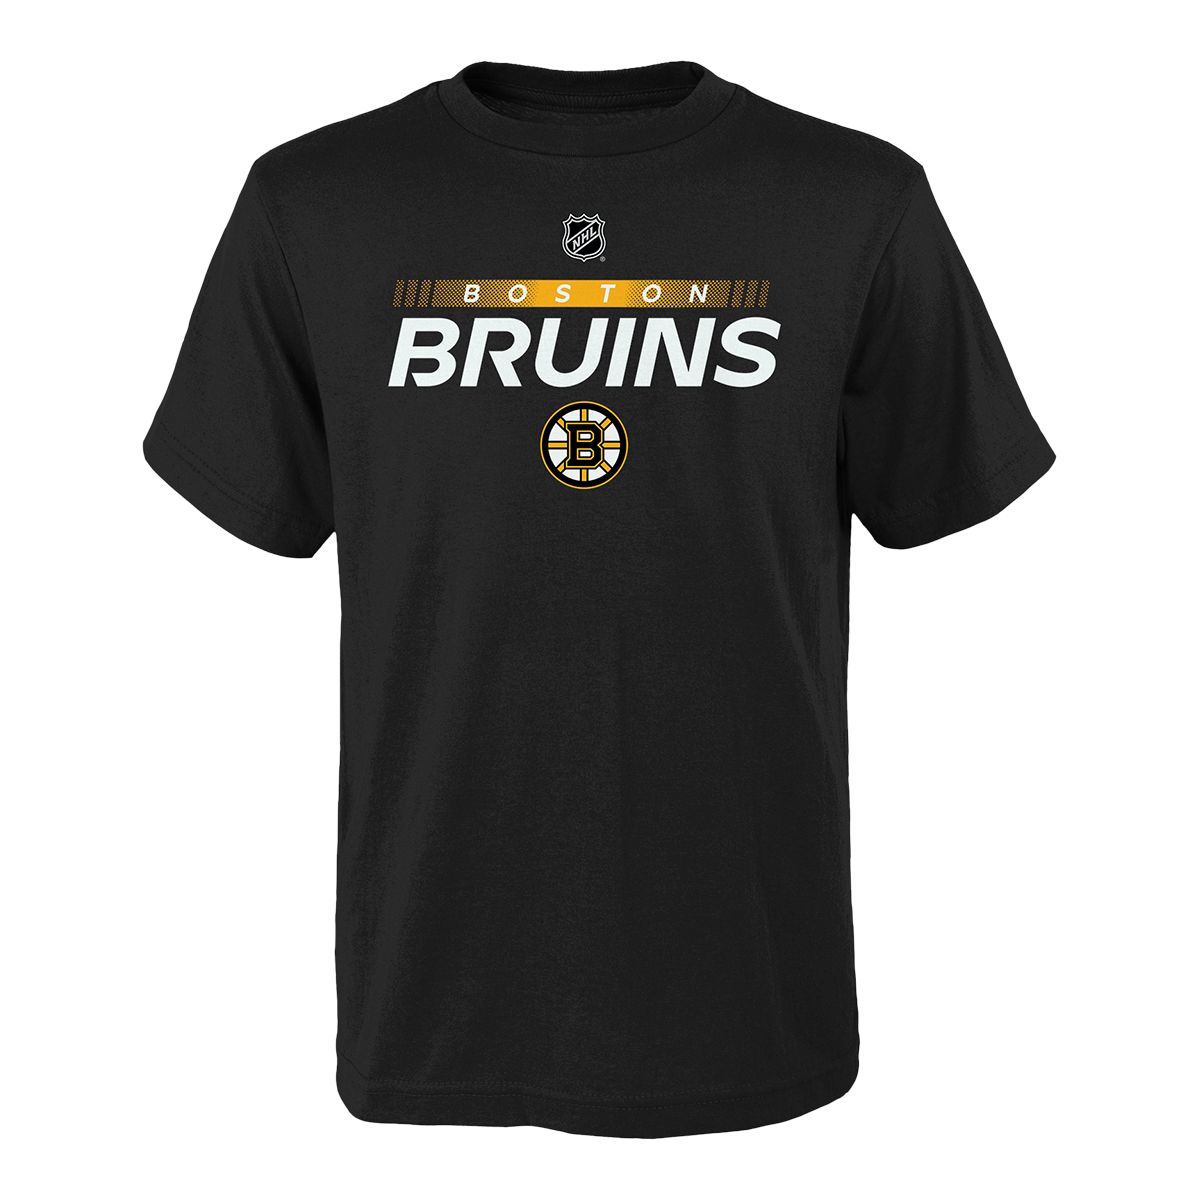 Official boston bruins fr shirt, hoodie, sweatshirt for men and women